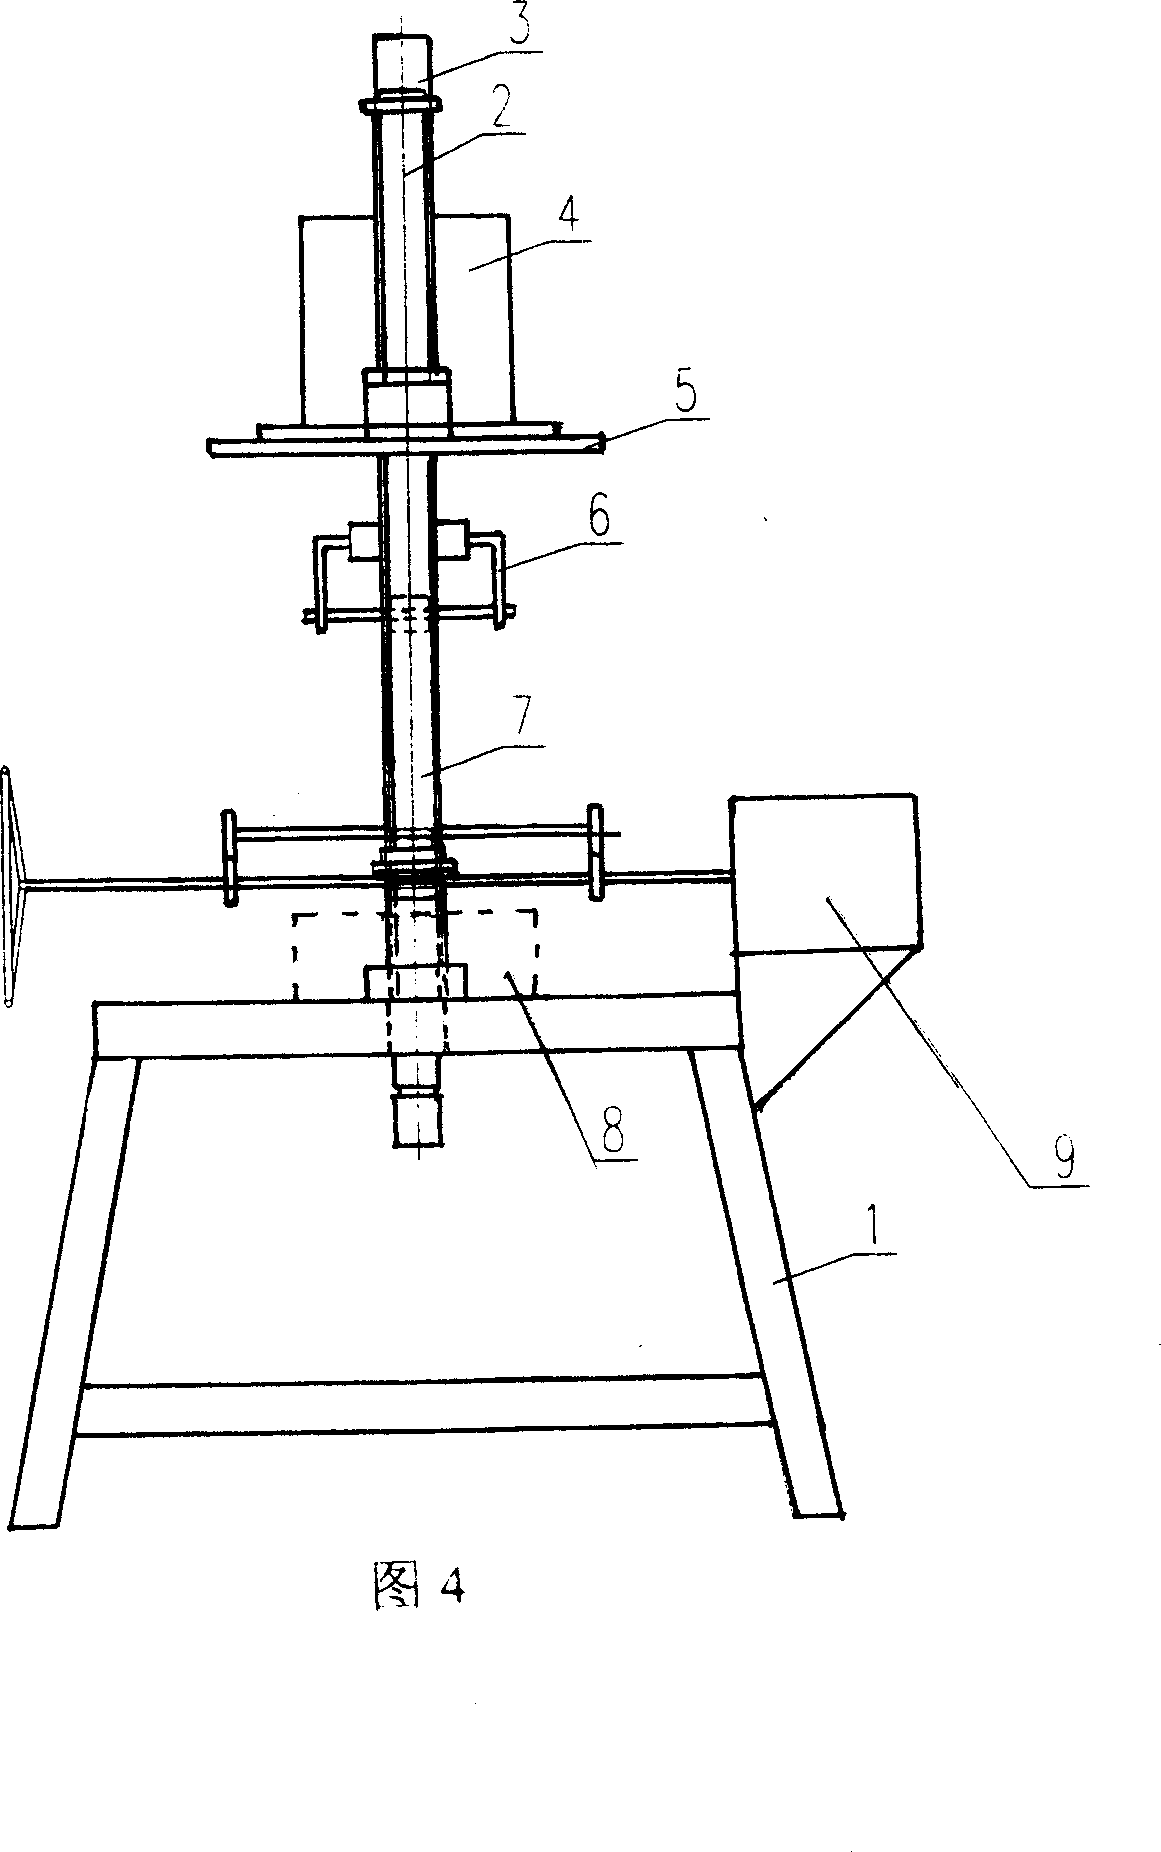 Hydraulic through-hole processing method and apparatus